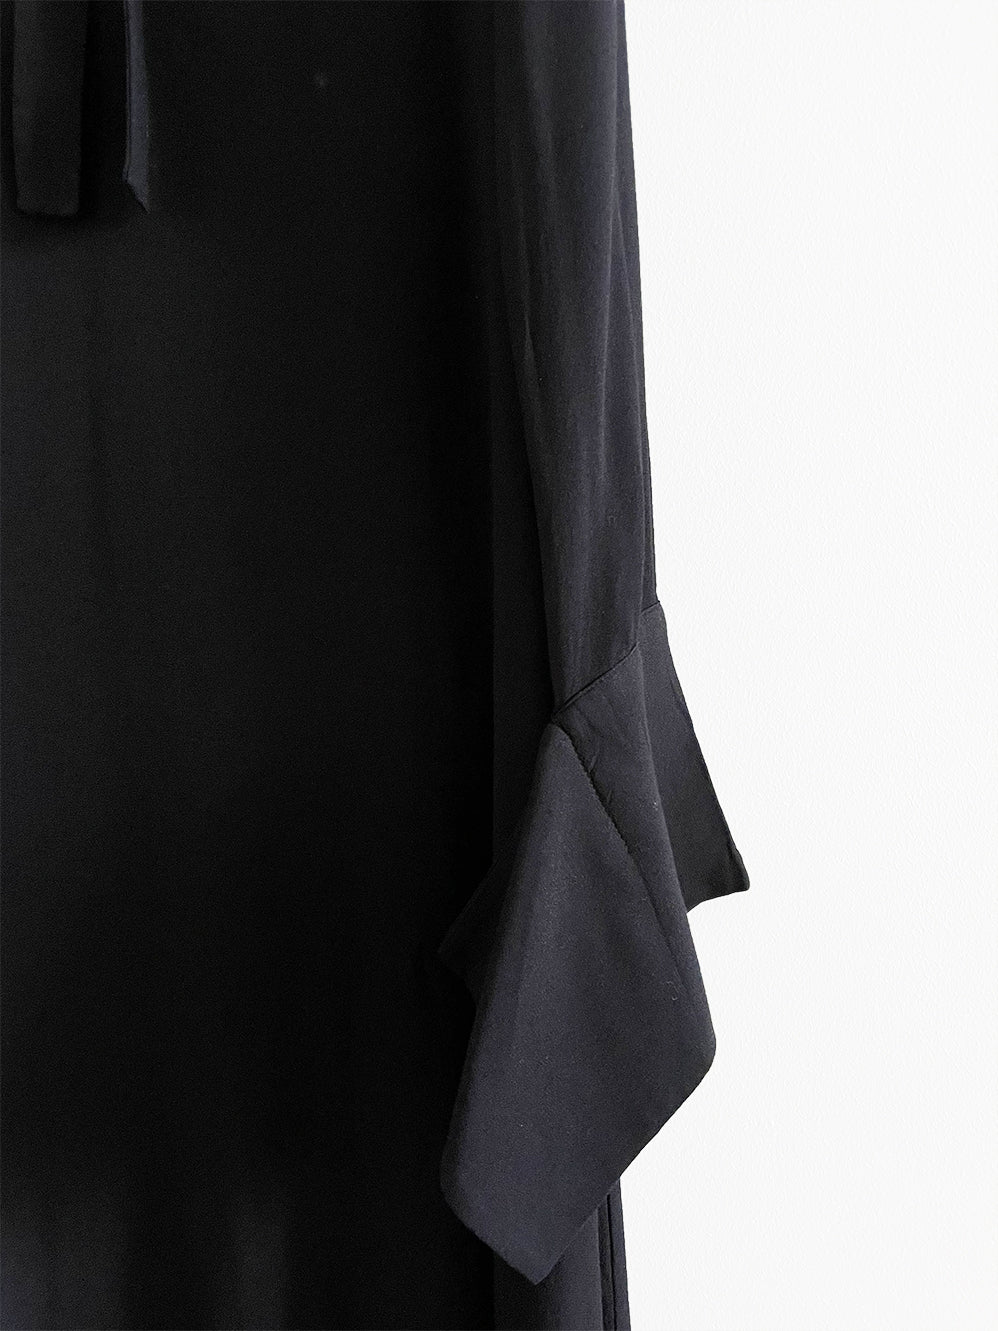 Black Dress Victorian Style, Size L